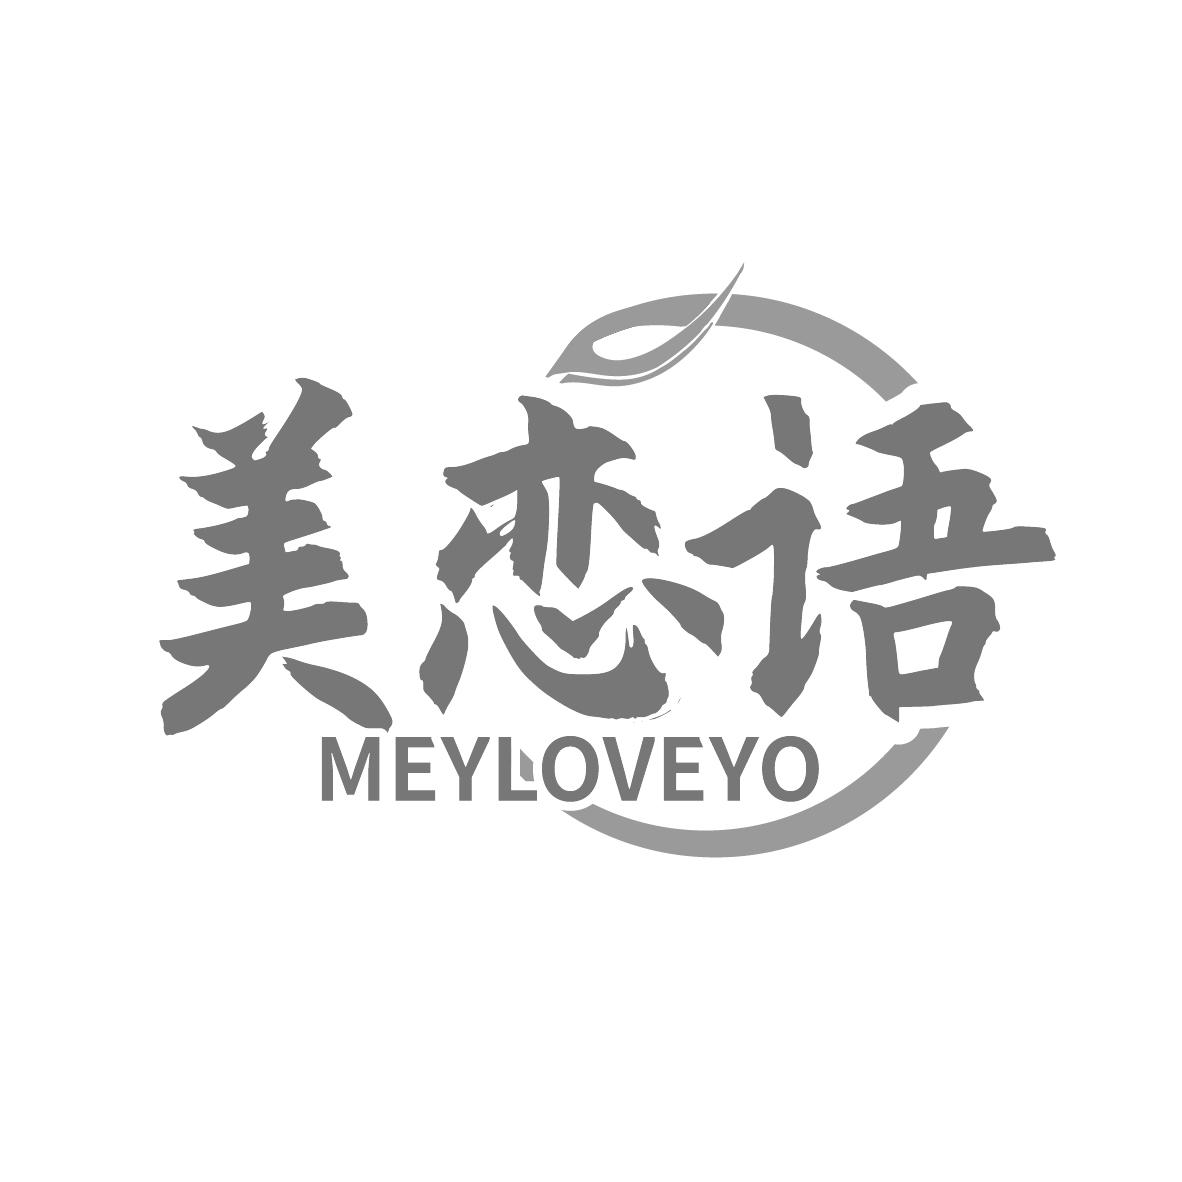  MEYLOVEYO